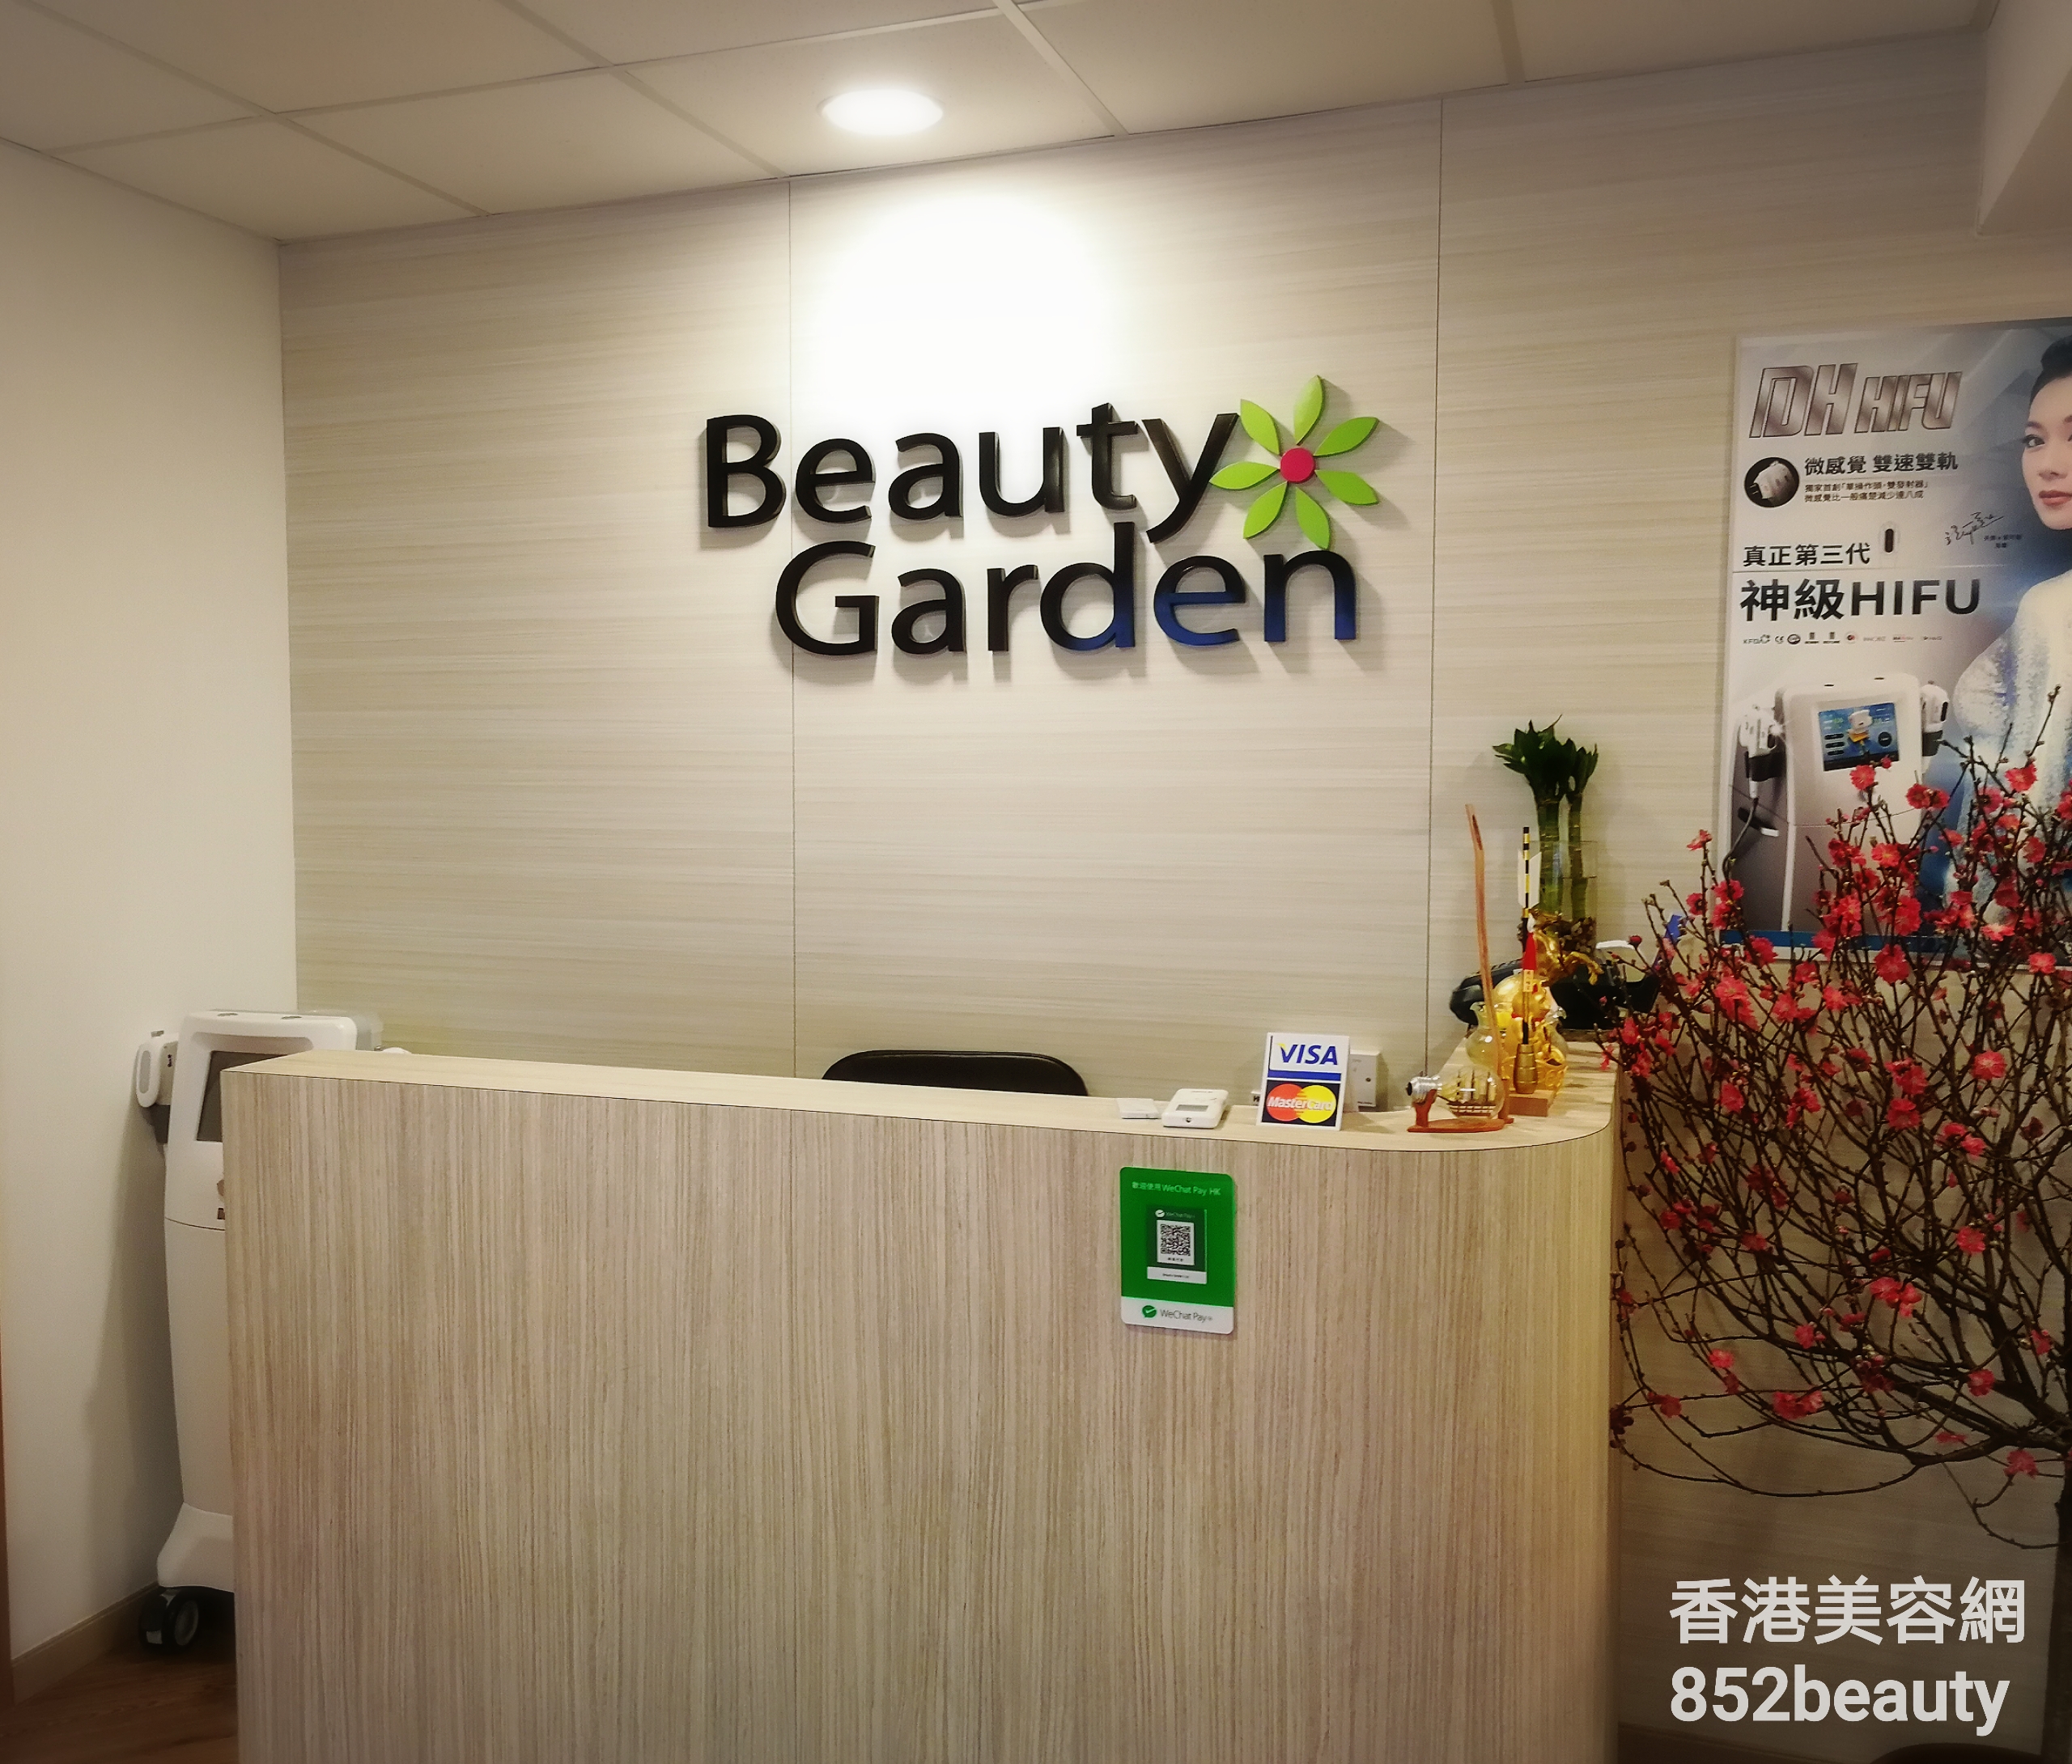 Hong Kong Beauty Salon Beauty Salon / Beautician: Beauty Garden